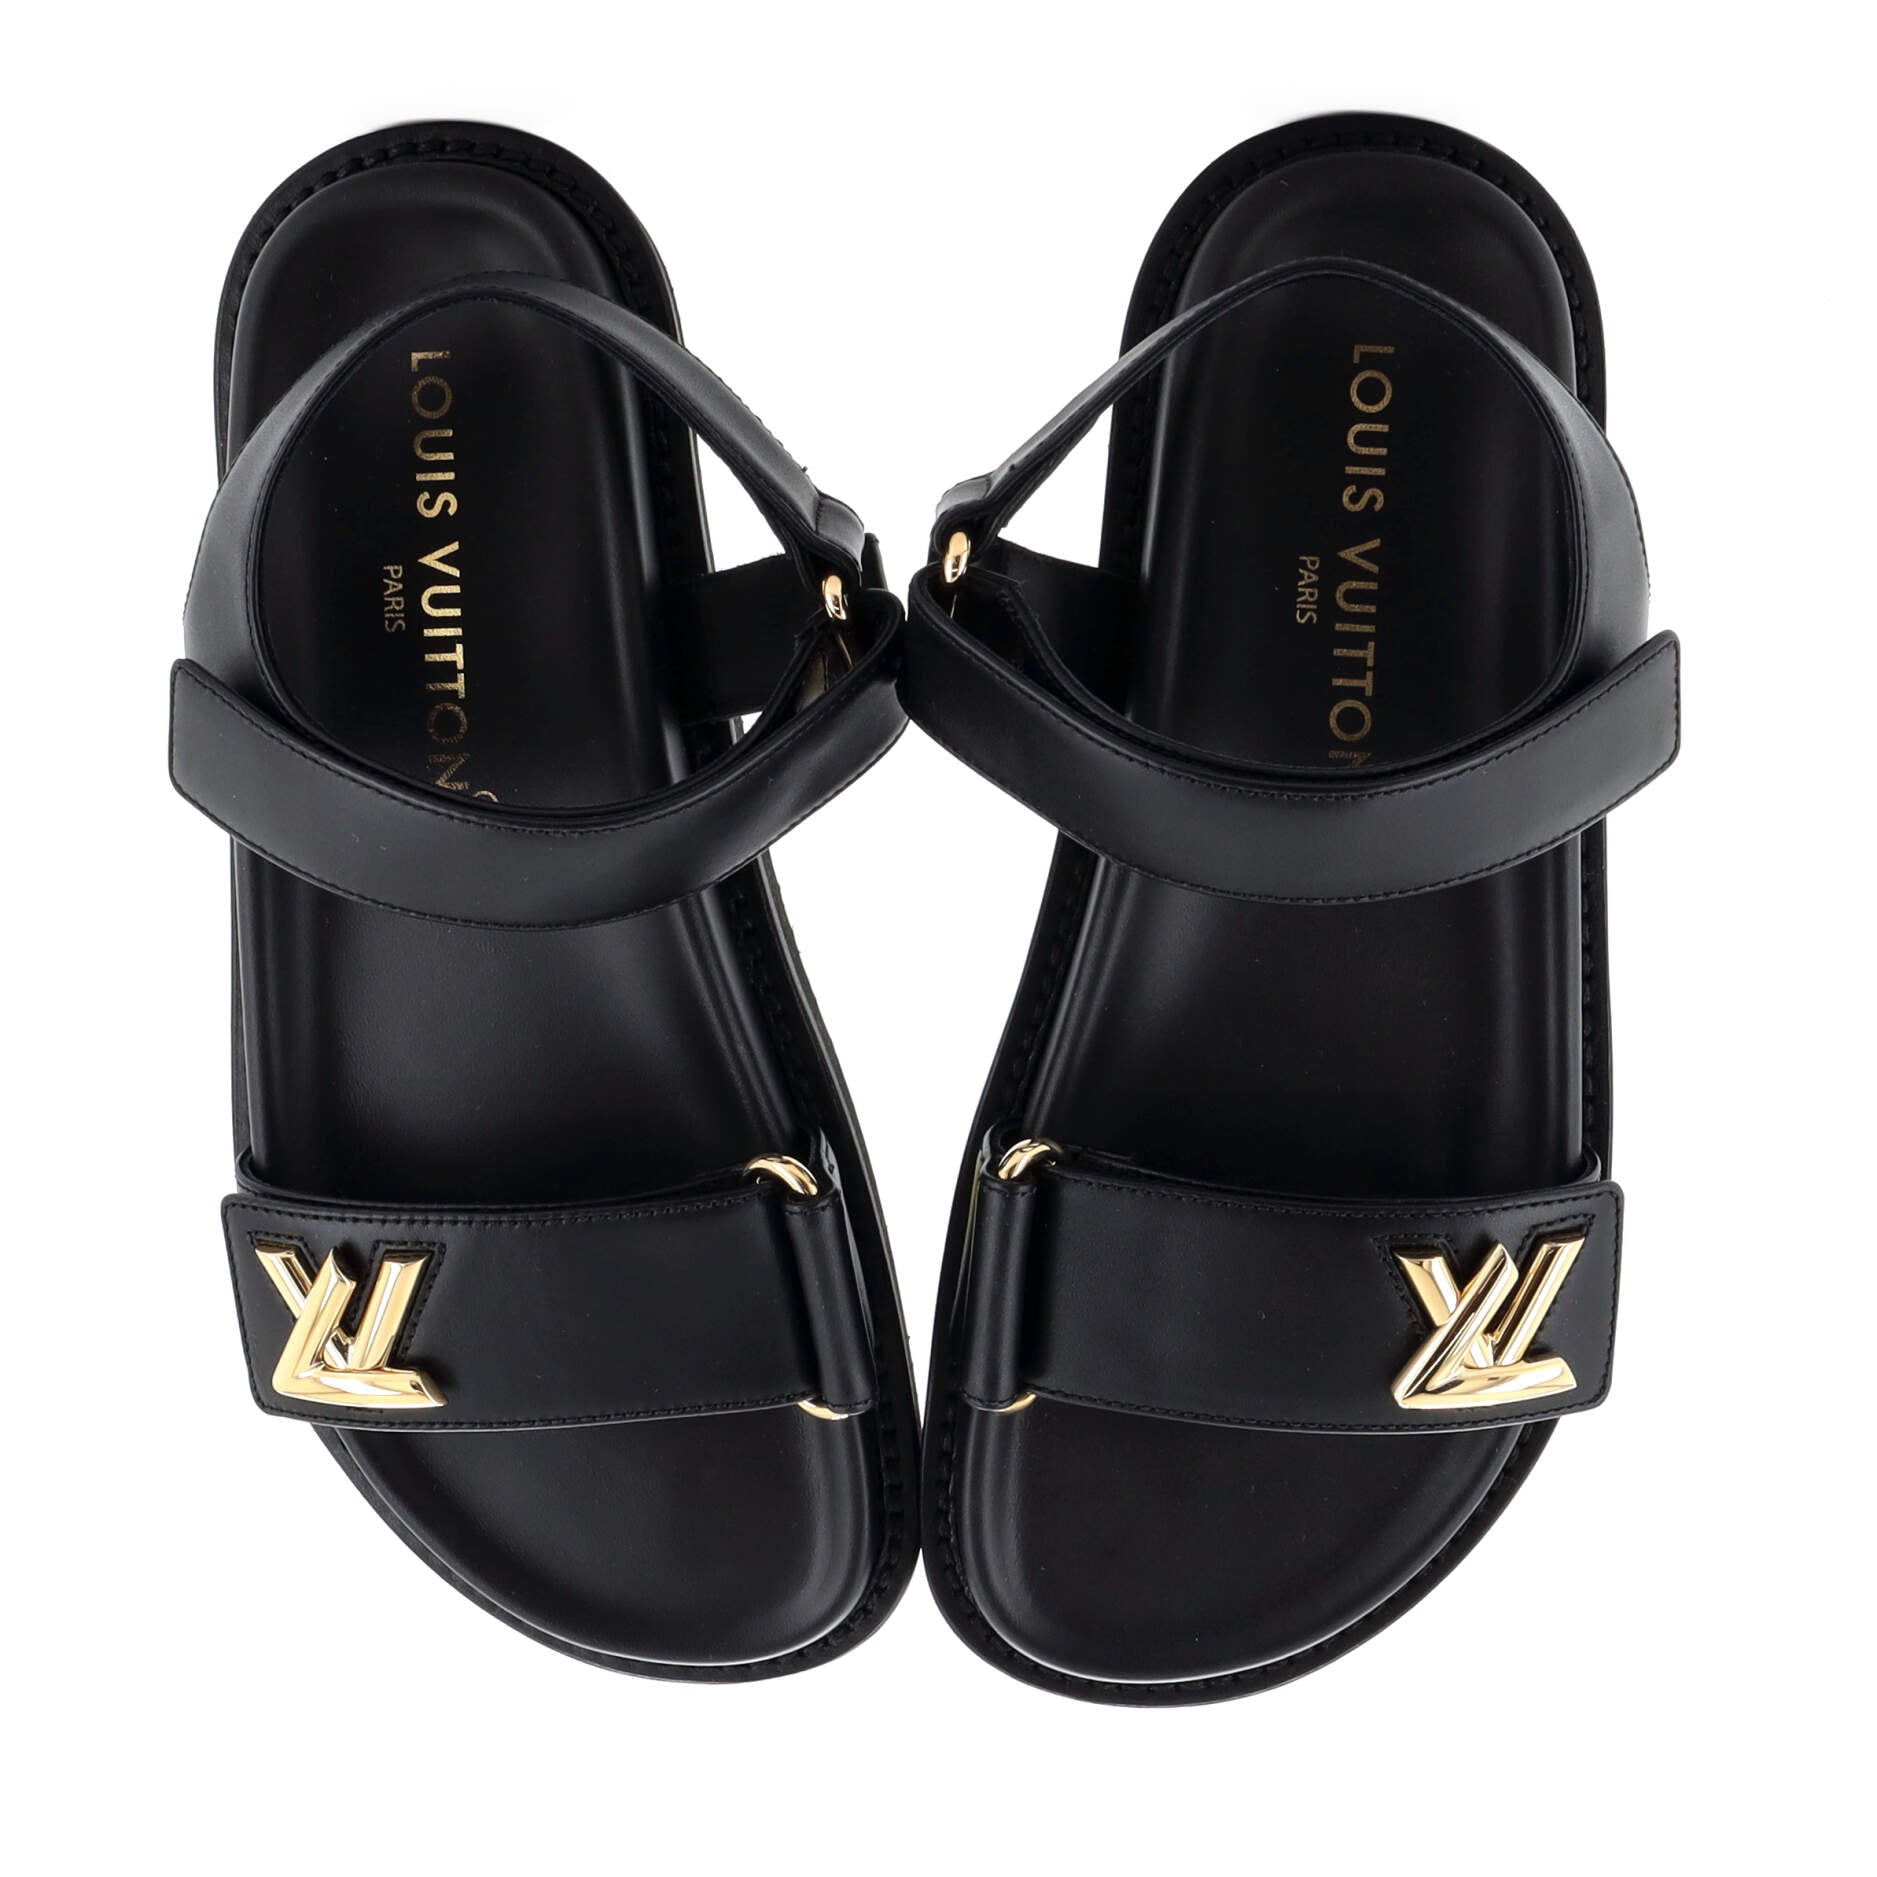 LV Sunset Flat Comfort Sandal - Women - Shoes